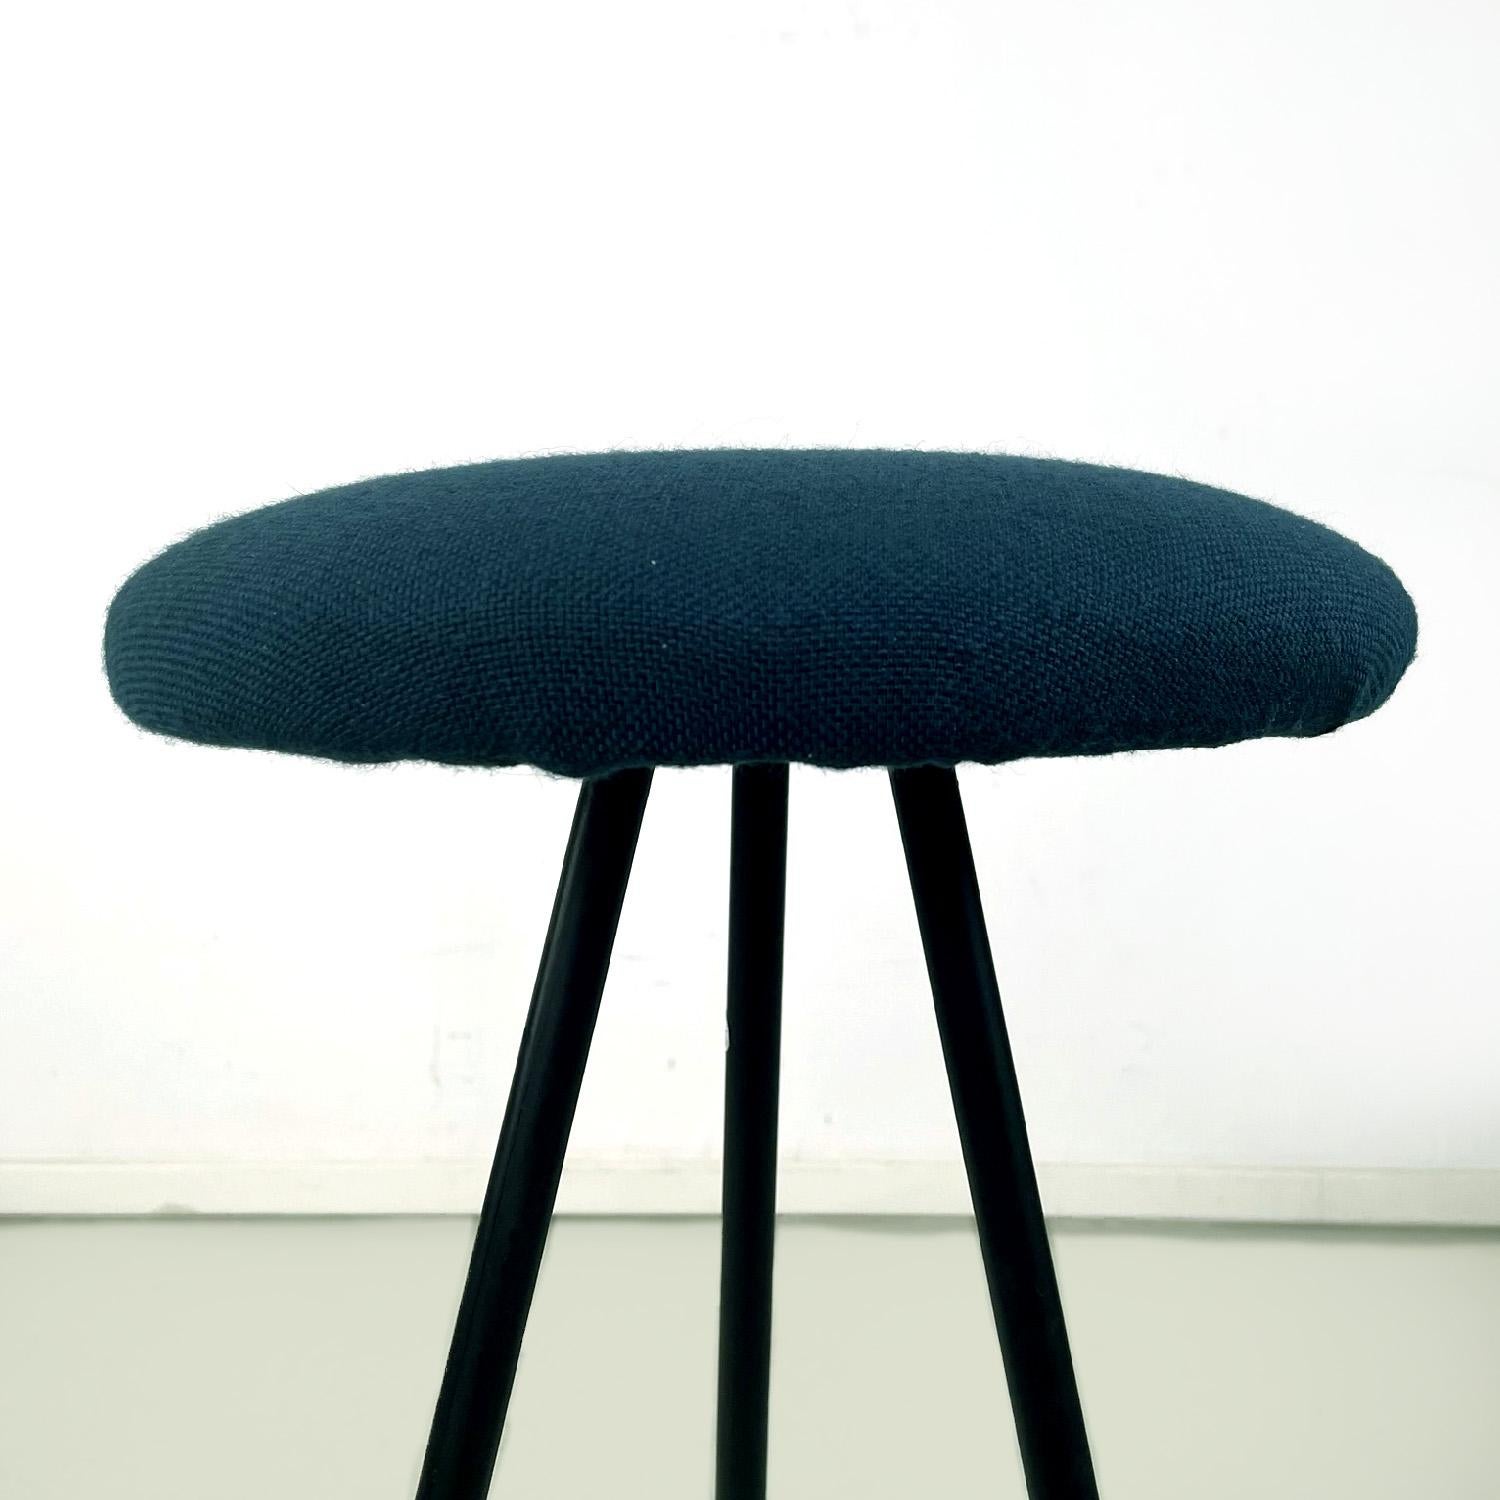 Mid-20th Century Italian mid-century modern three legs black metal and blue fabric stool, 1950s For Sale